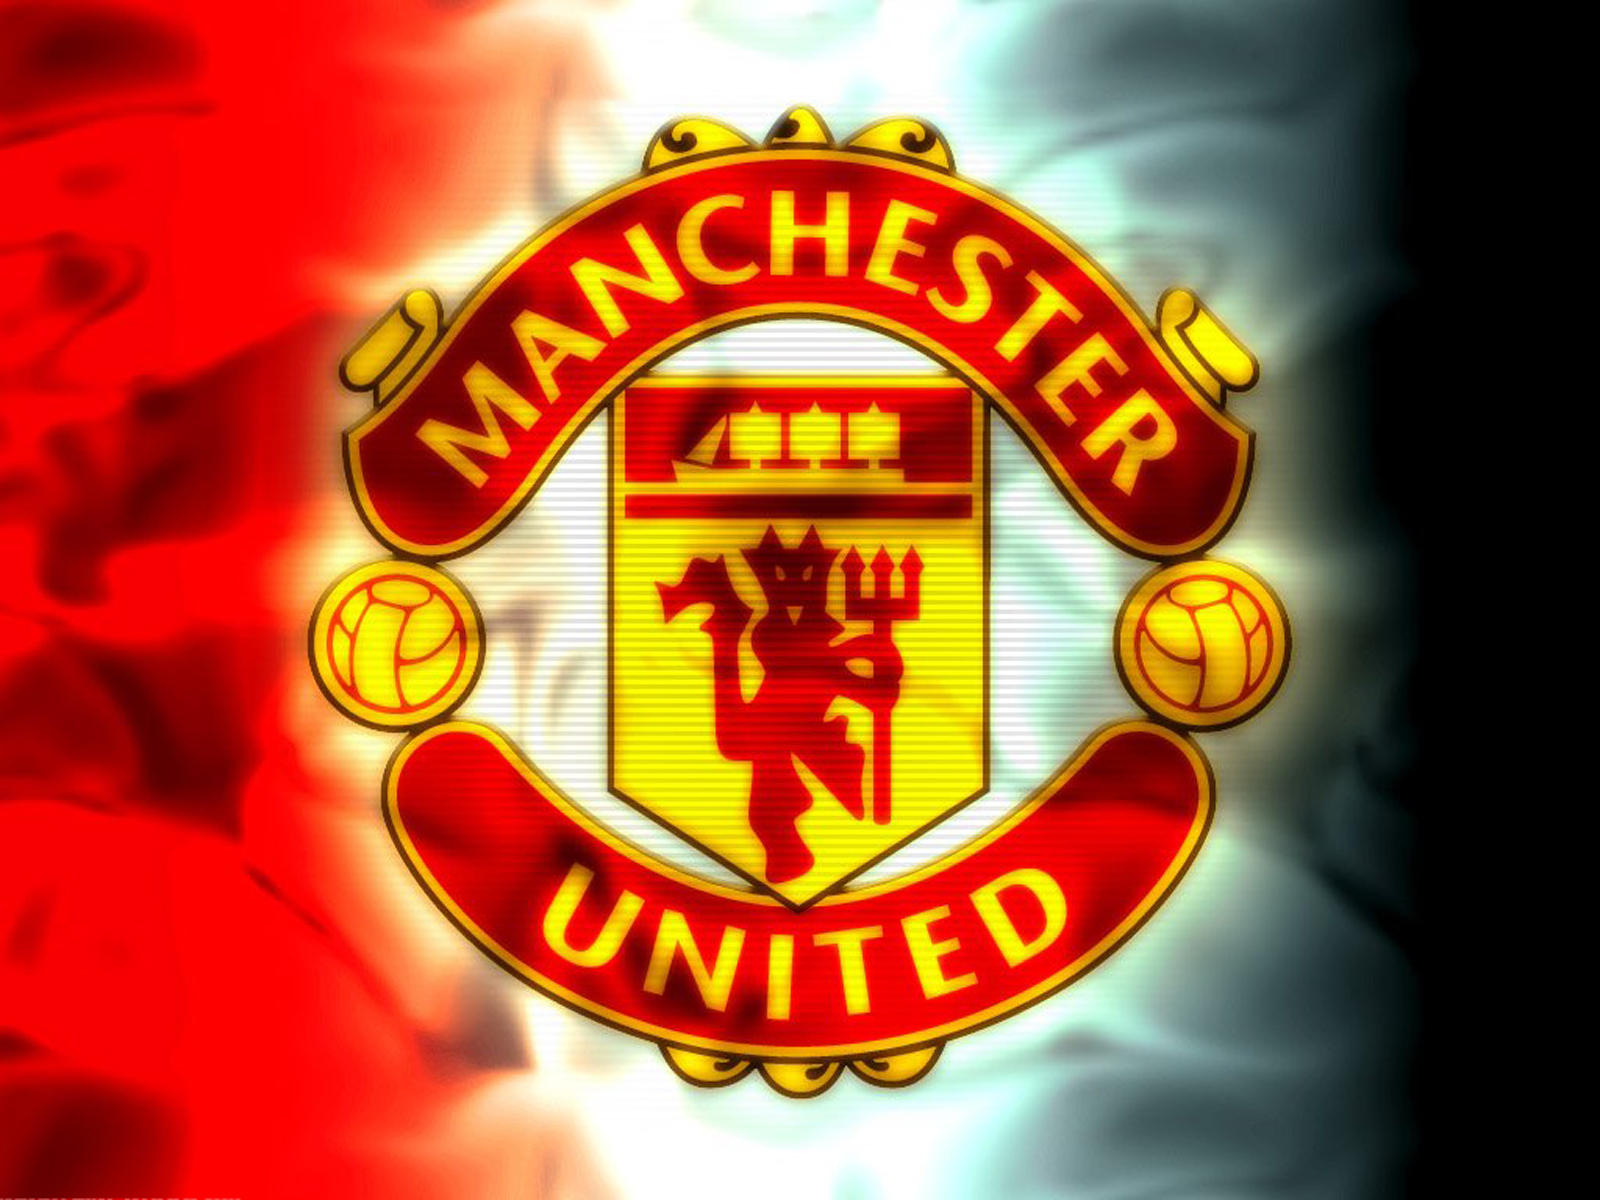 Man United: A Legendary Football Club - The Chupitos!